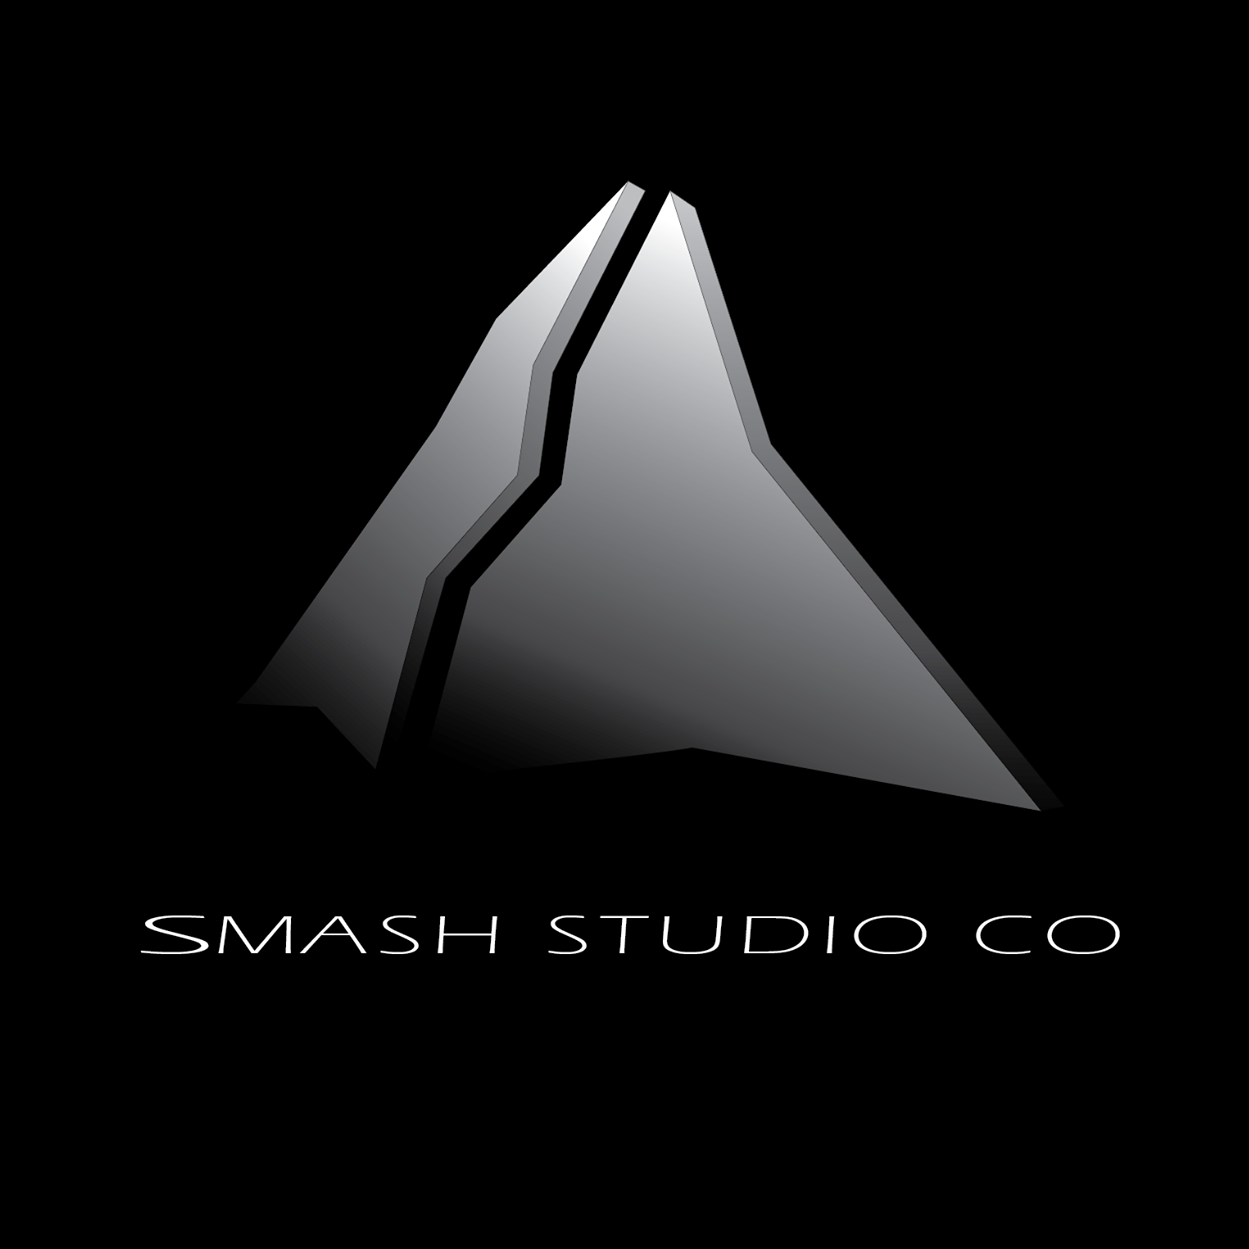 Smash Studio Company